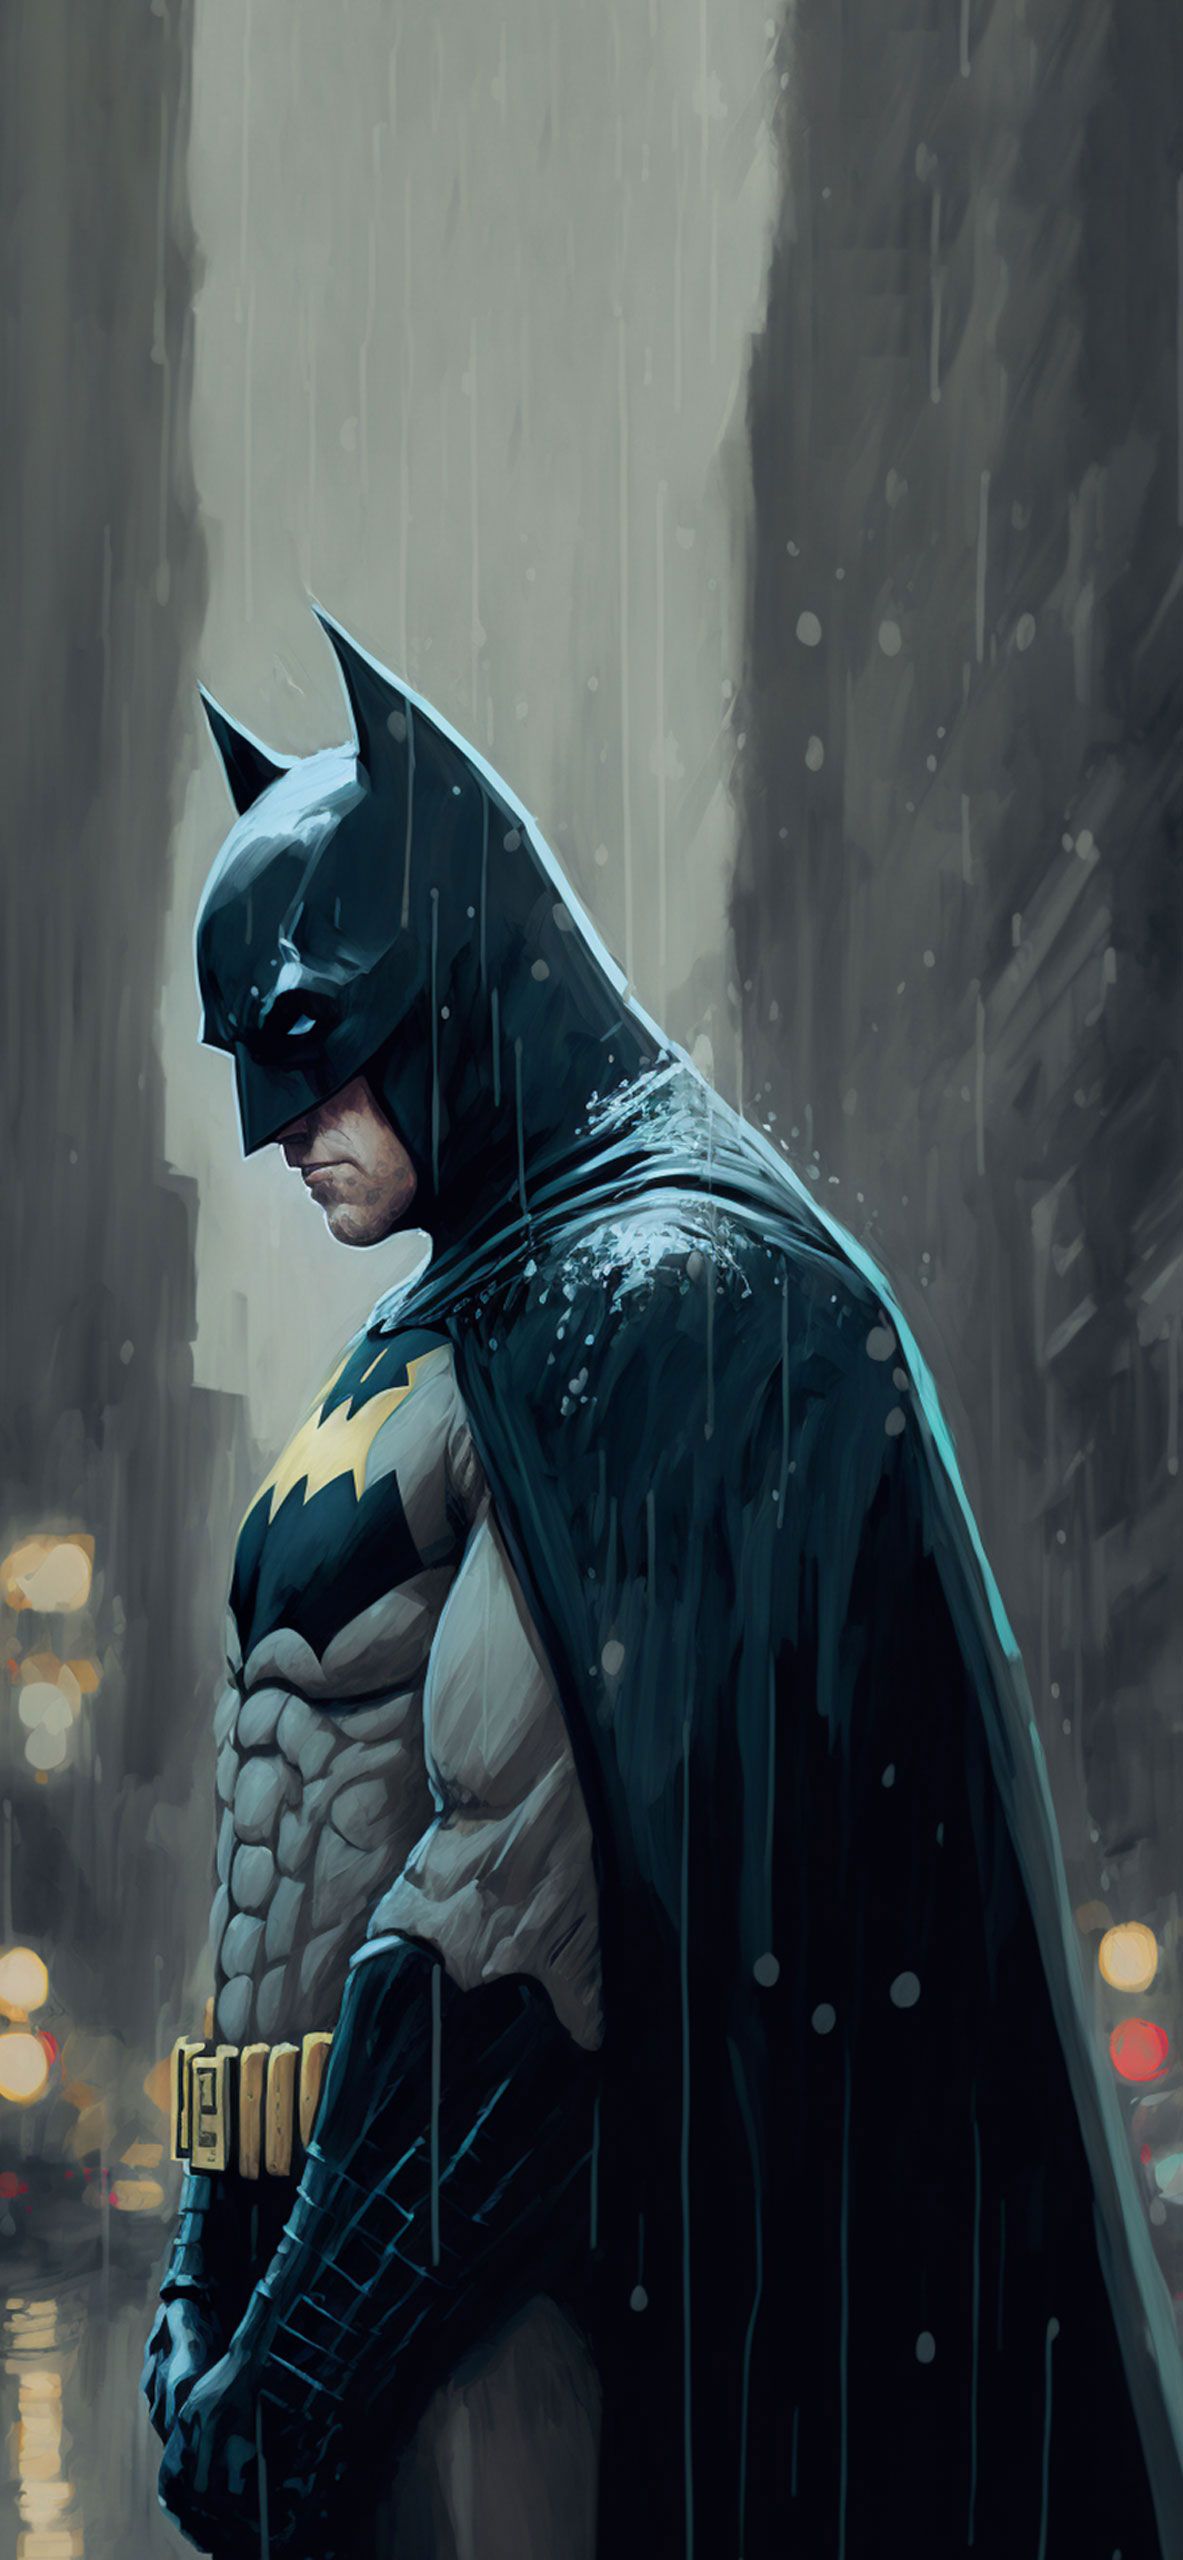  Batman Hintergrundbild 1183x2560. Batman in the Rain Wallpaper Wallpaper for iPhone